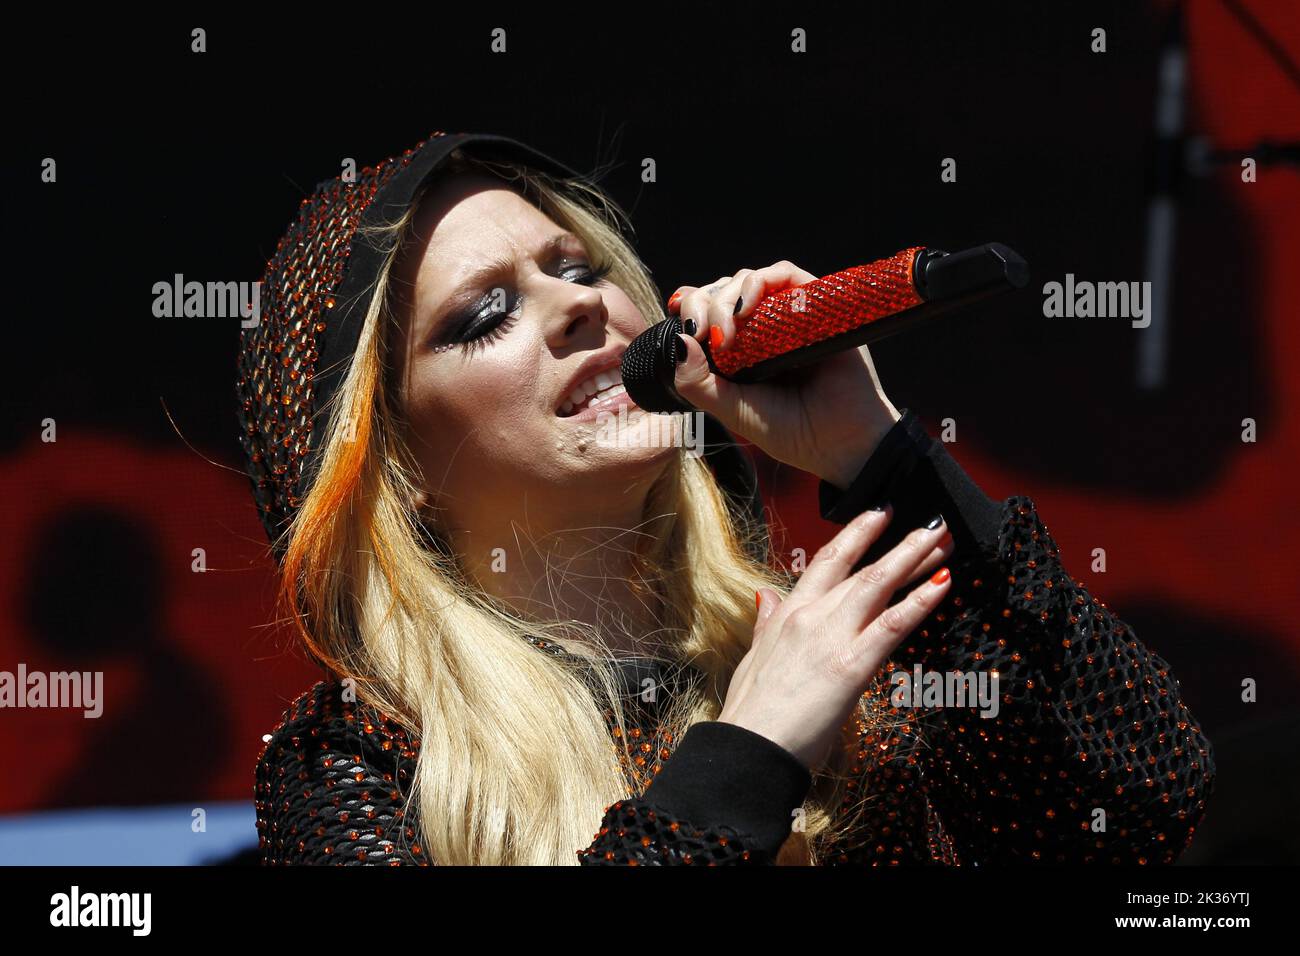 Las Vegas, Usa. 24. September 2022. Sänger Avril Lavigne spielt auf der Bühne während des iHeartRadio Music Festival Daytime Concerts um Area15 Uhr in Las Vegas, Nevada am Samstag, 24. September 2022. Foto von James Atoa/UPI Credit: UPI/Alamy Live News Stockfoto